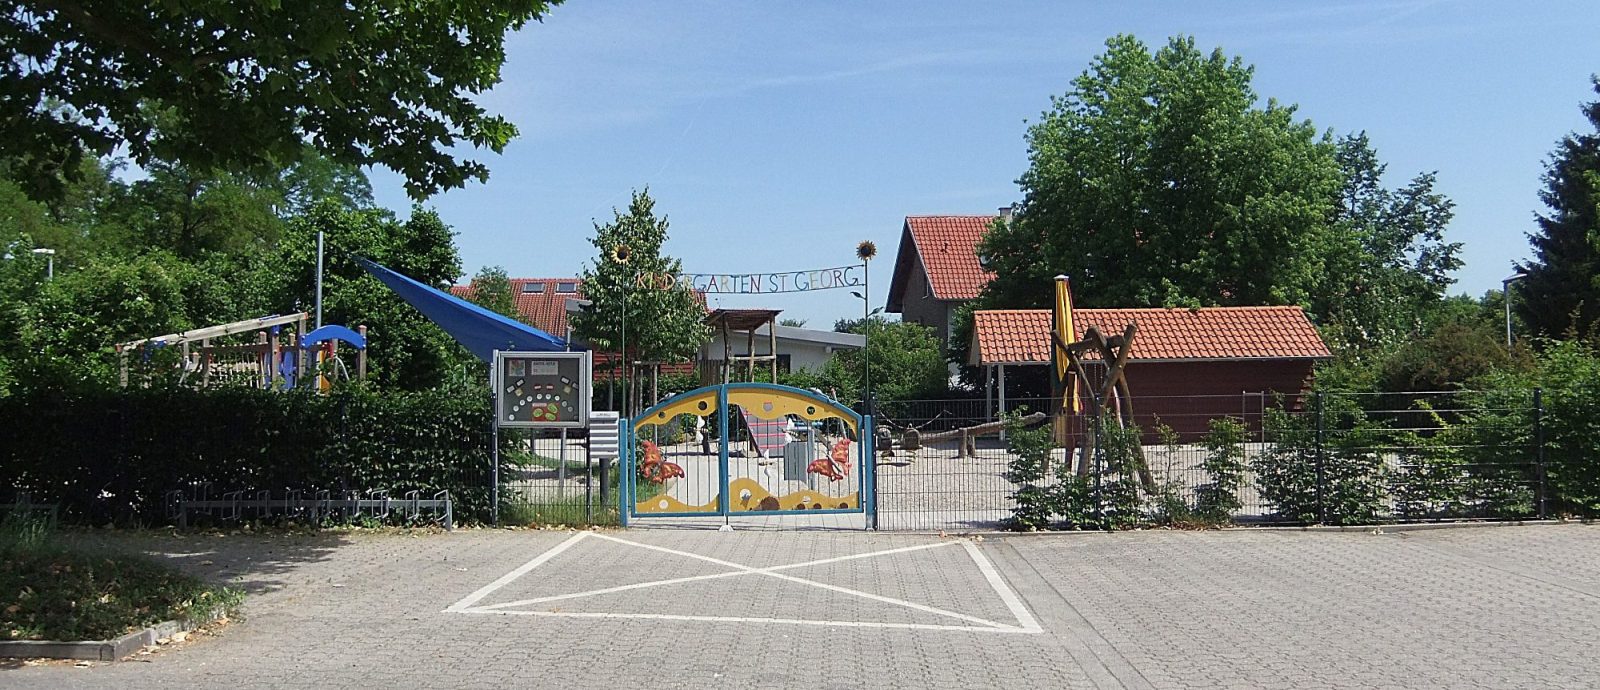 Datei:Kindergarten St Georg Hördt.JPG